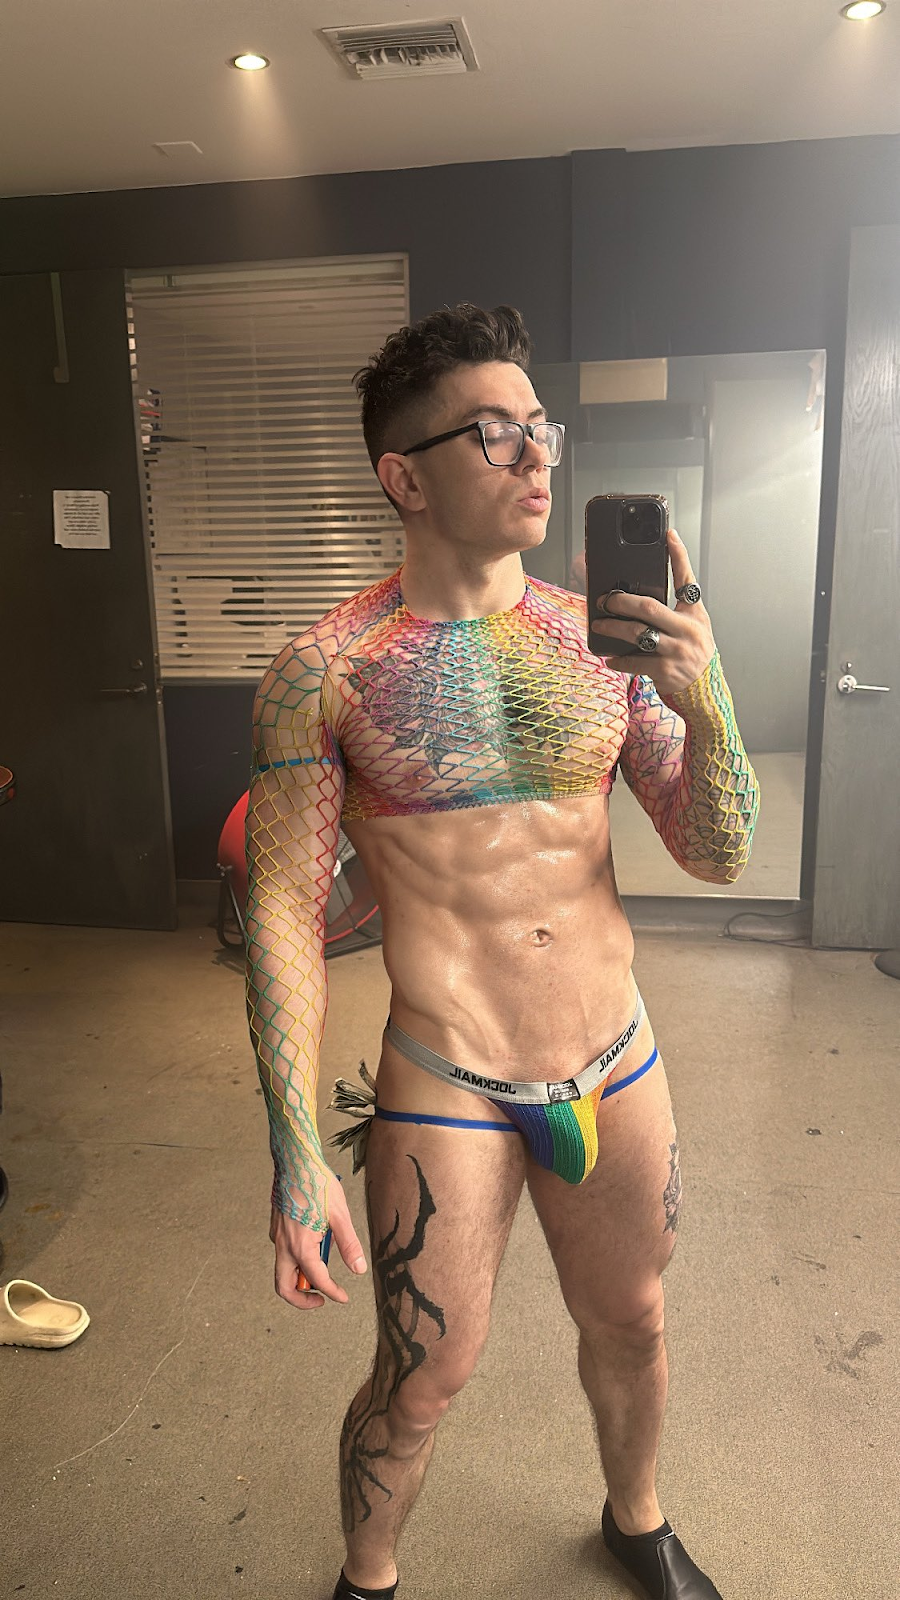 Clark Davis wearing rainbow jockmail and rainbow mesh shirt taking mirror selfie covered in sweat at the strip club